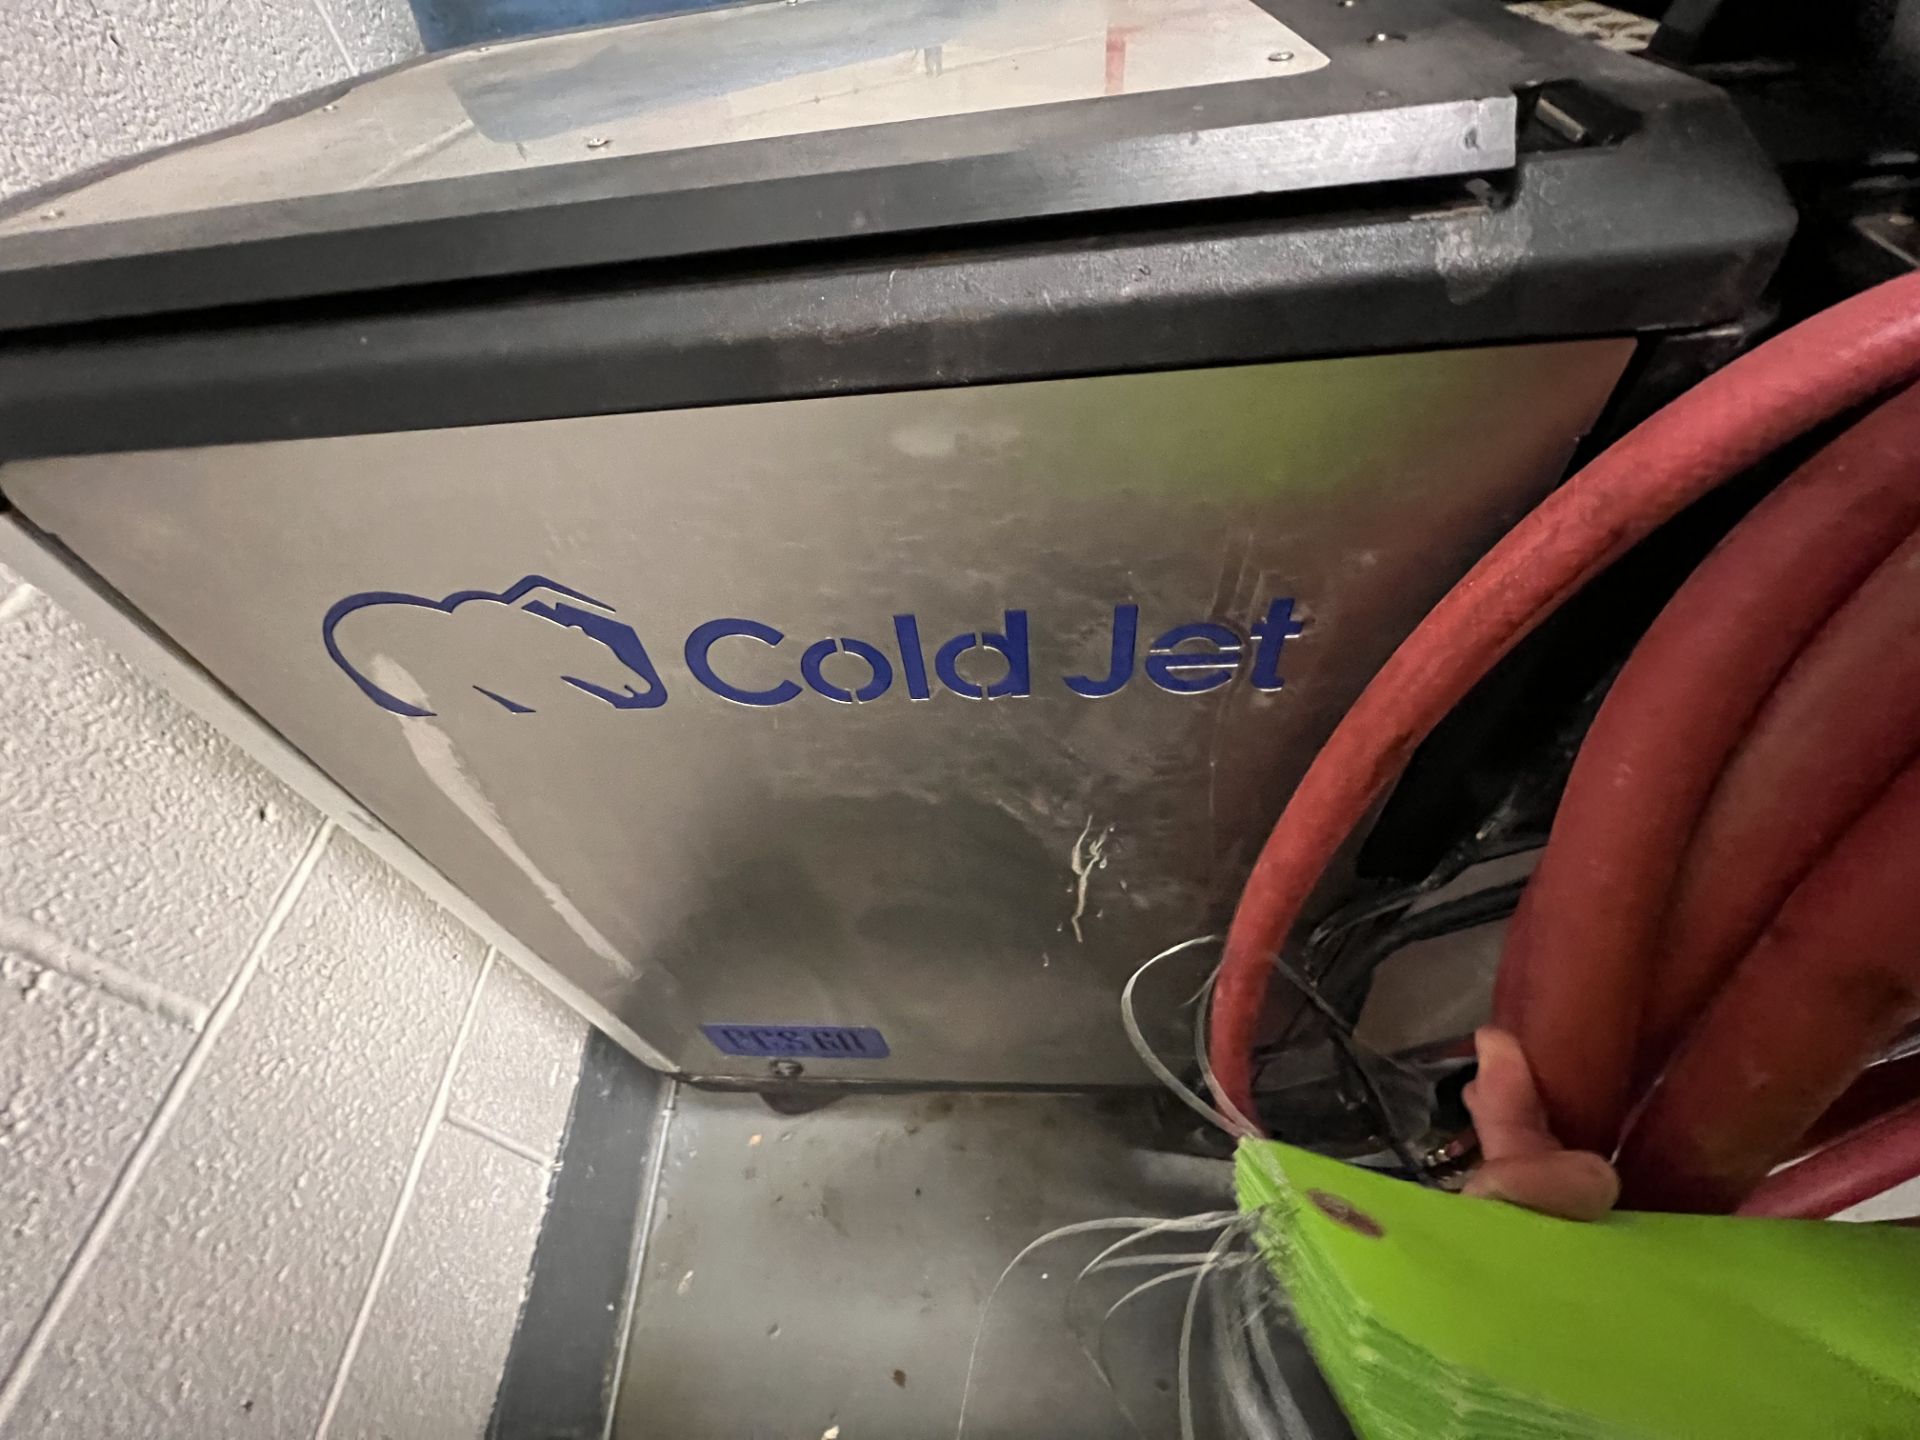 2020 COLD JET DRY ICE BLASTING MACHINE, MODEL PCS 60 - C001, S/N 01506, 100 - 240 V, 1 PHASE - Image 4 of 9